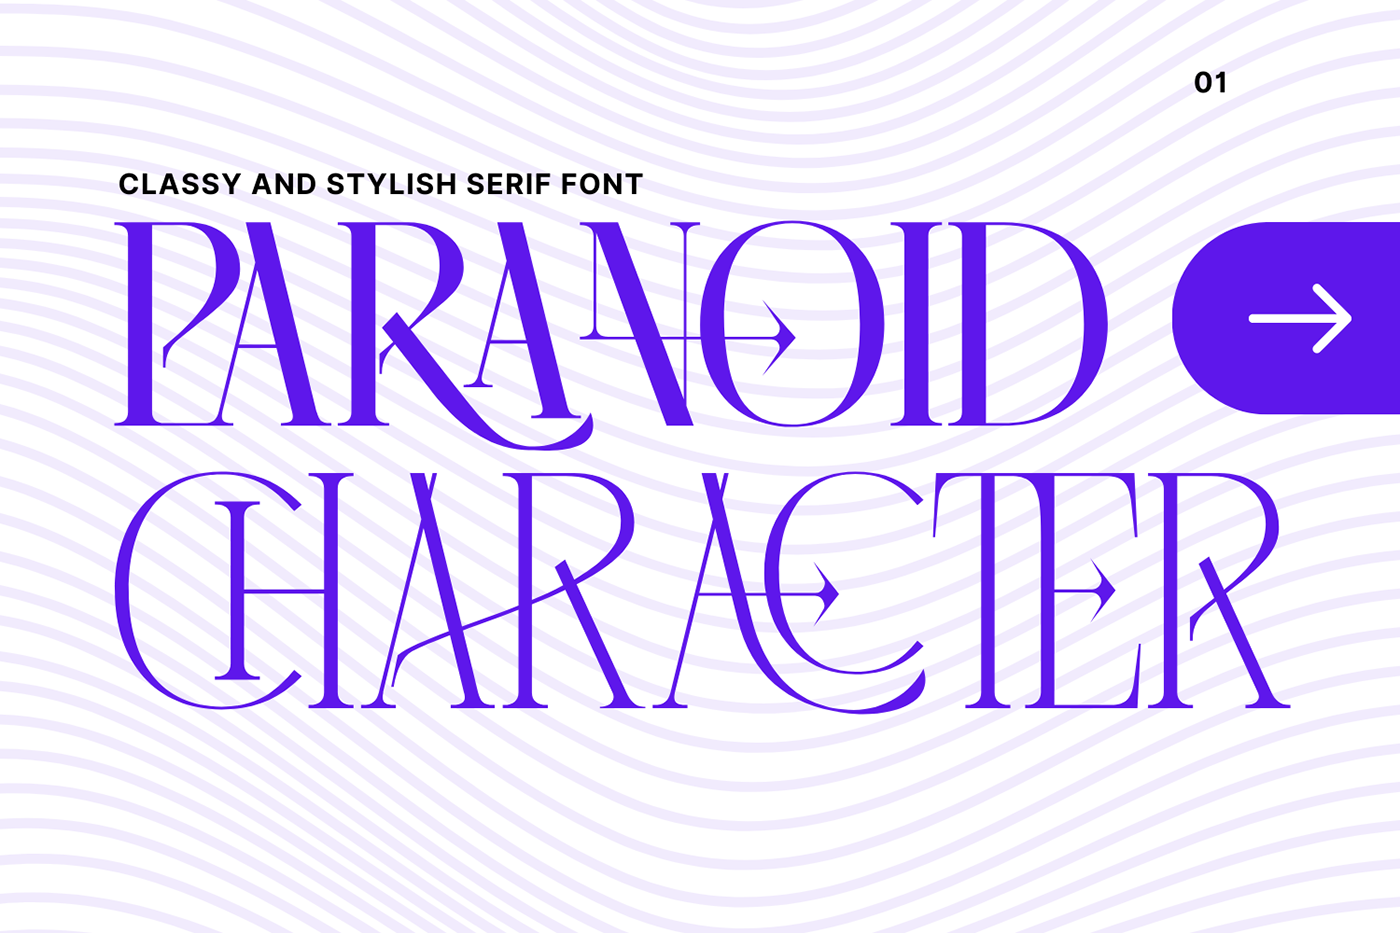 font paranoid stylish font character font modern serif fon PARANOID CHARACTER PARANOID FONT